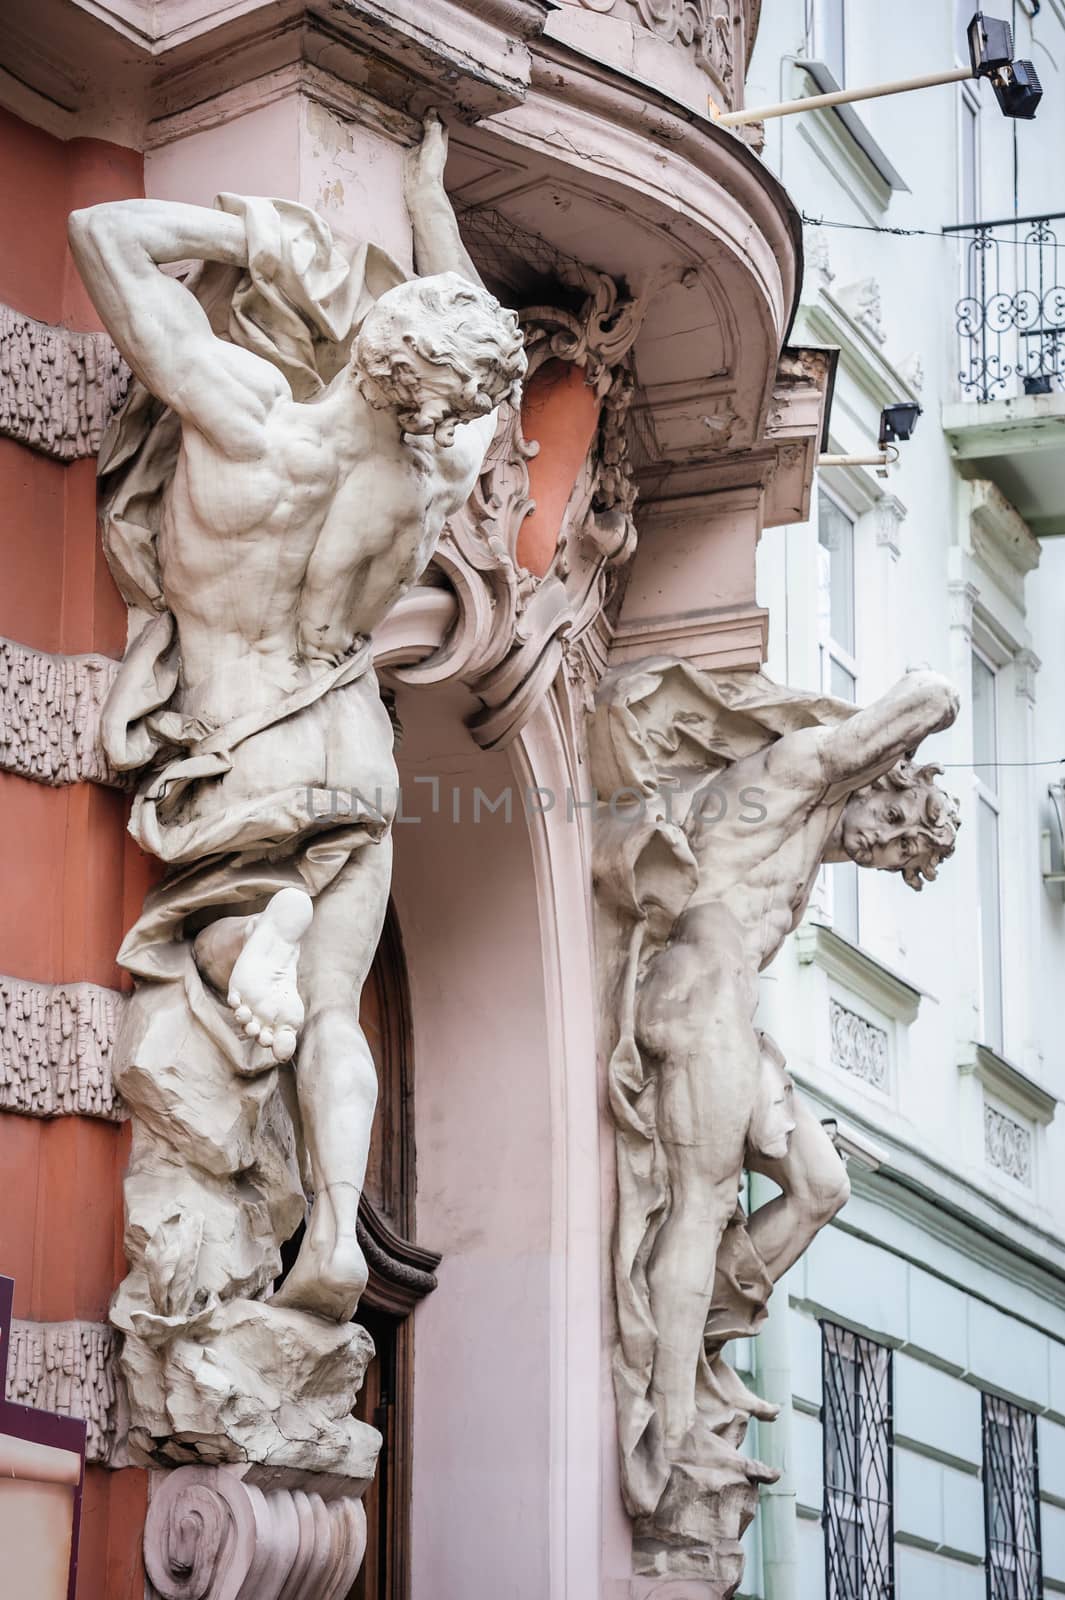 Architectural details of Lvov Lviv, Ukraine by starush